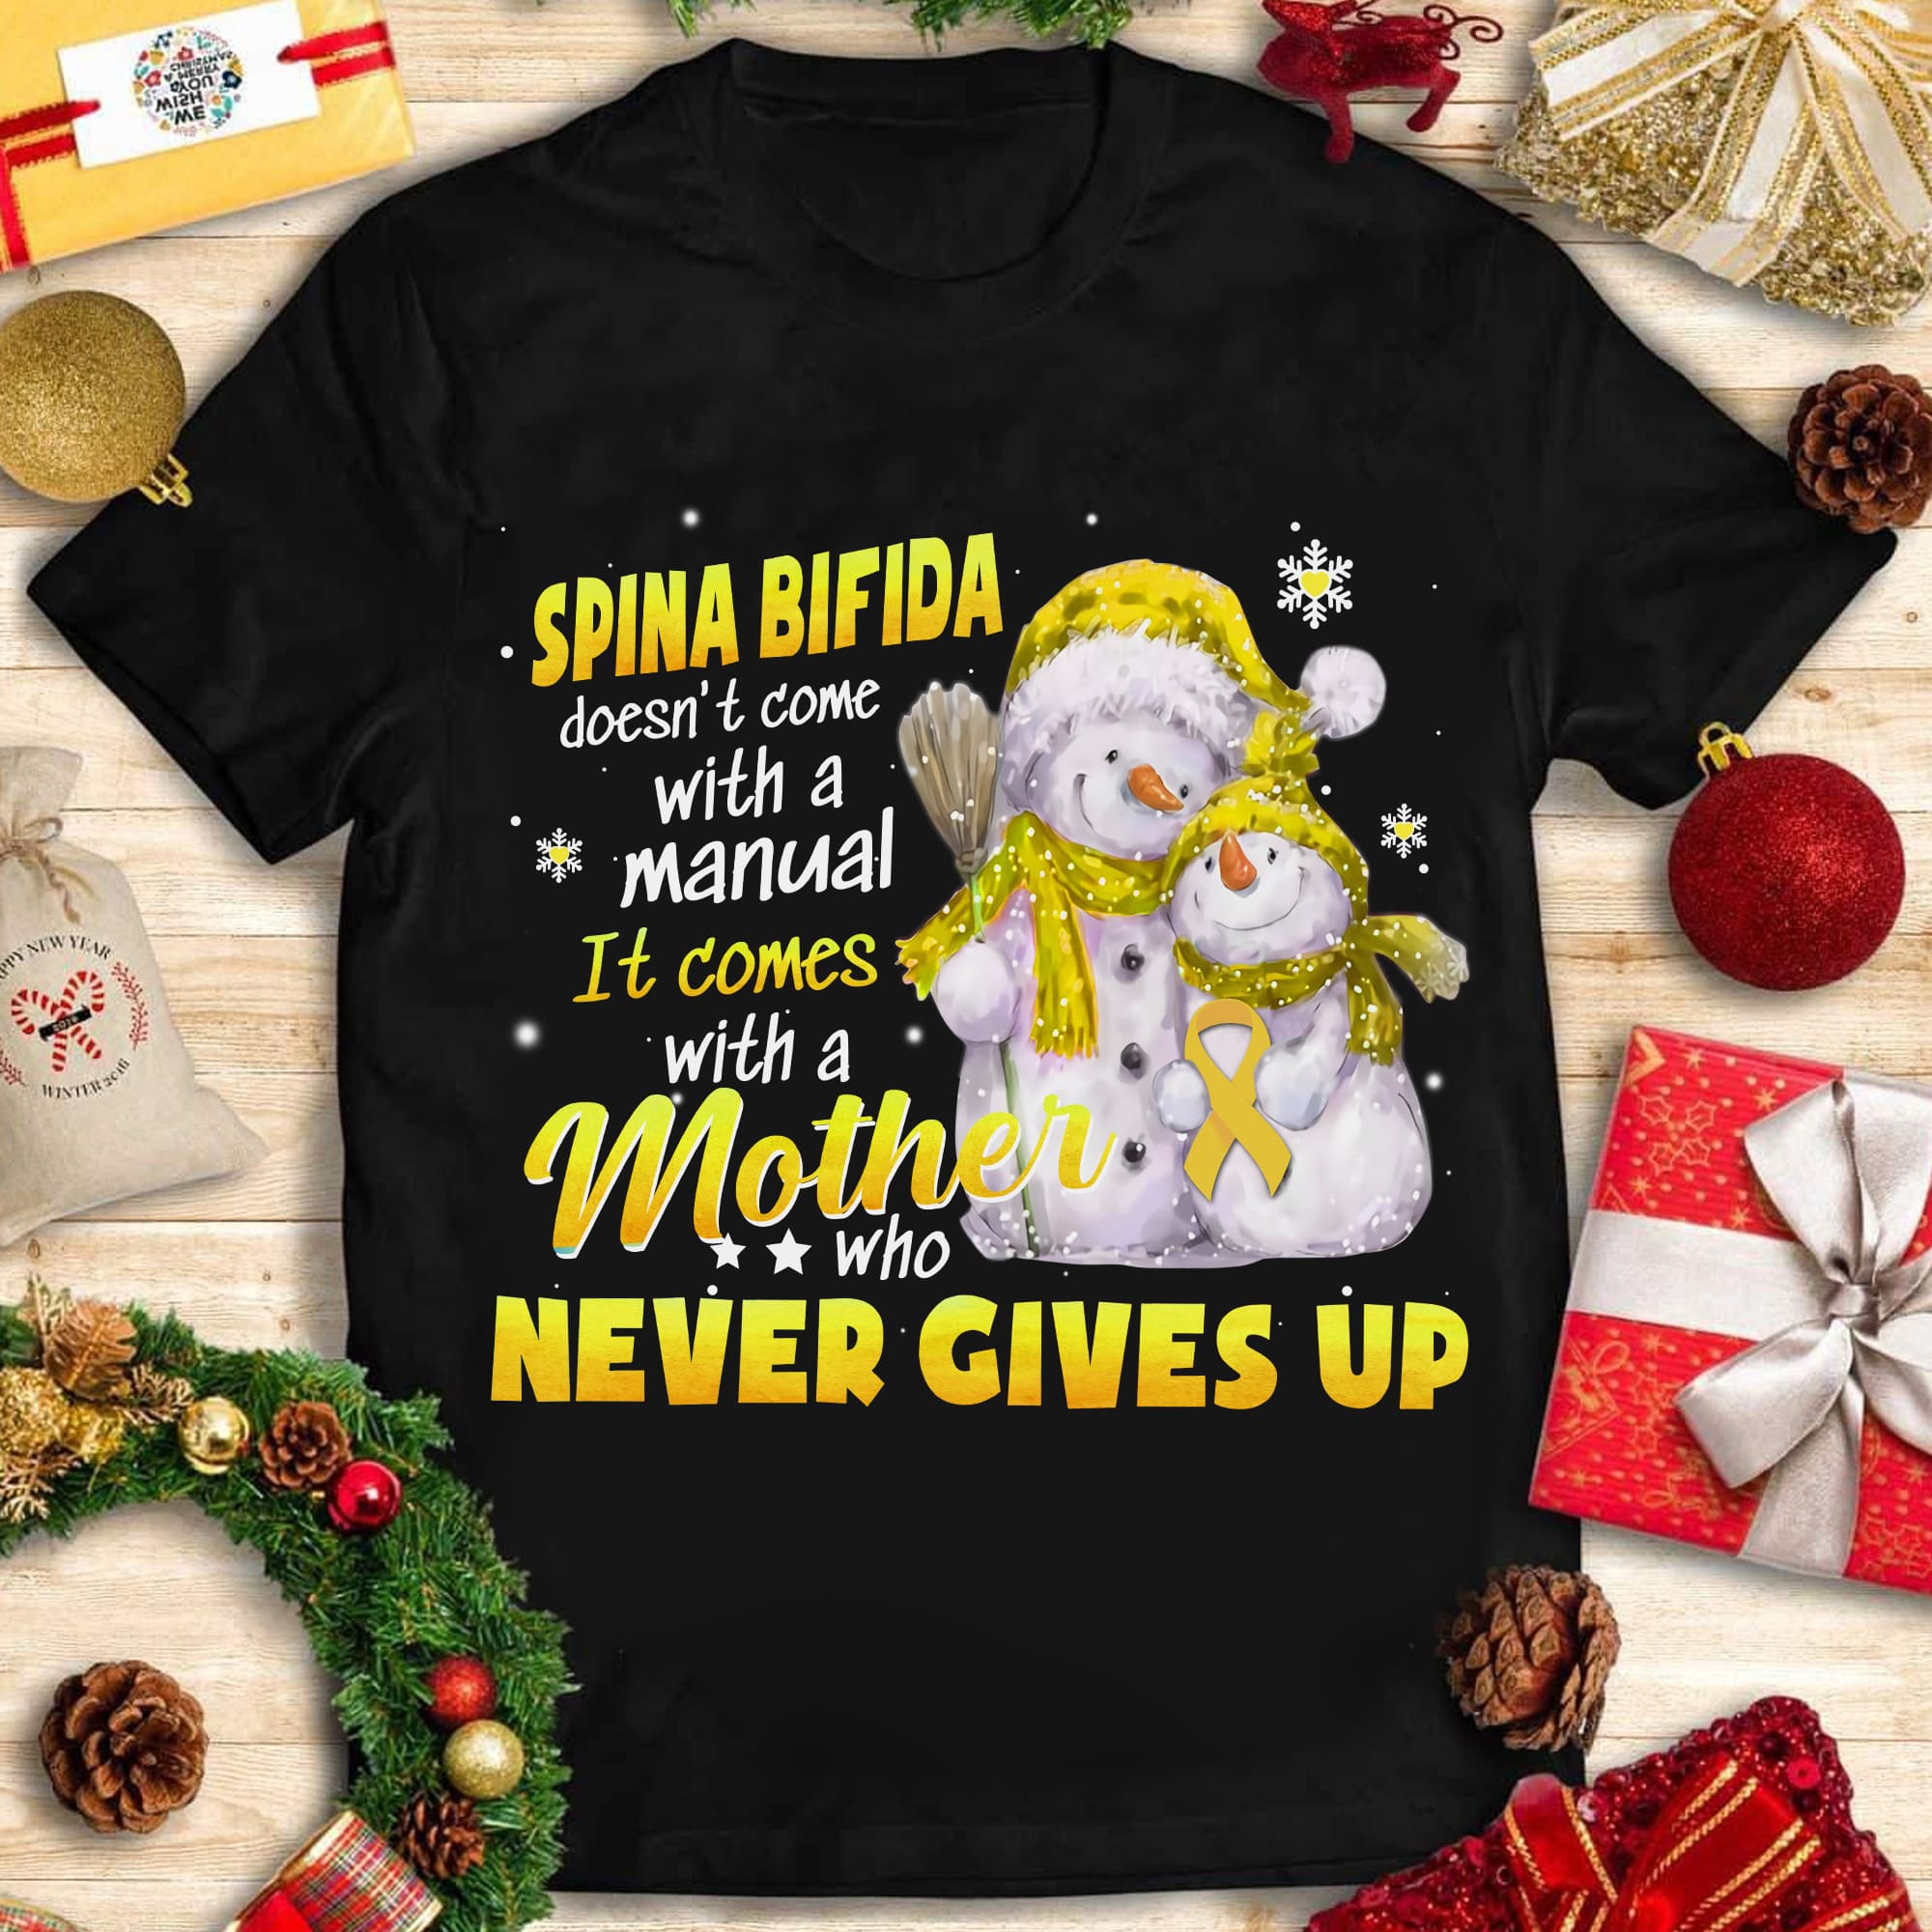 Spina bifida awareness - Never gives up, Christmas snowman family